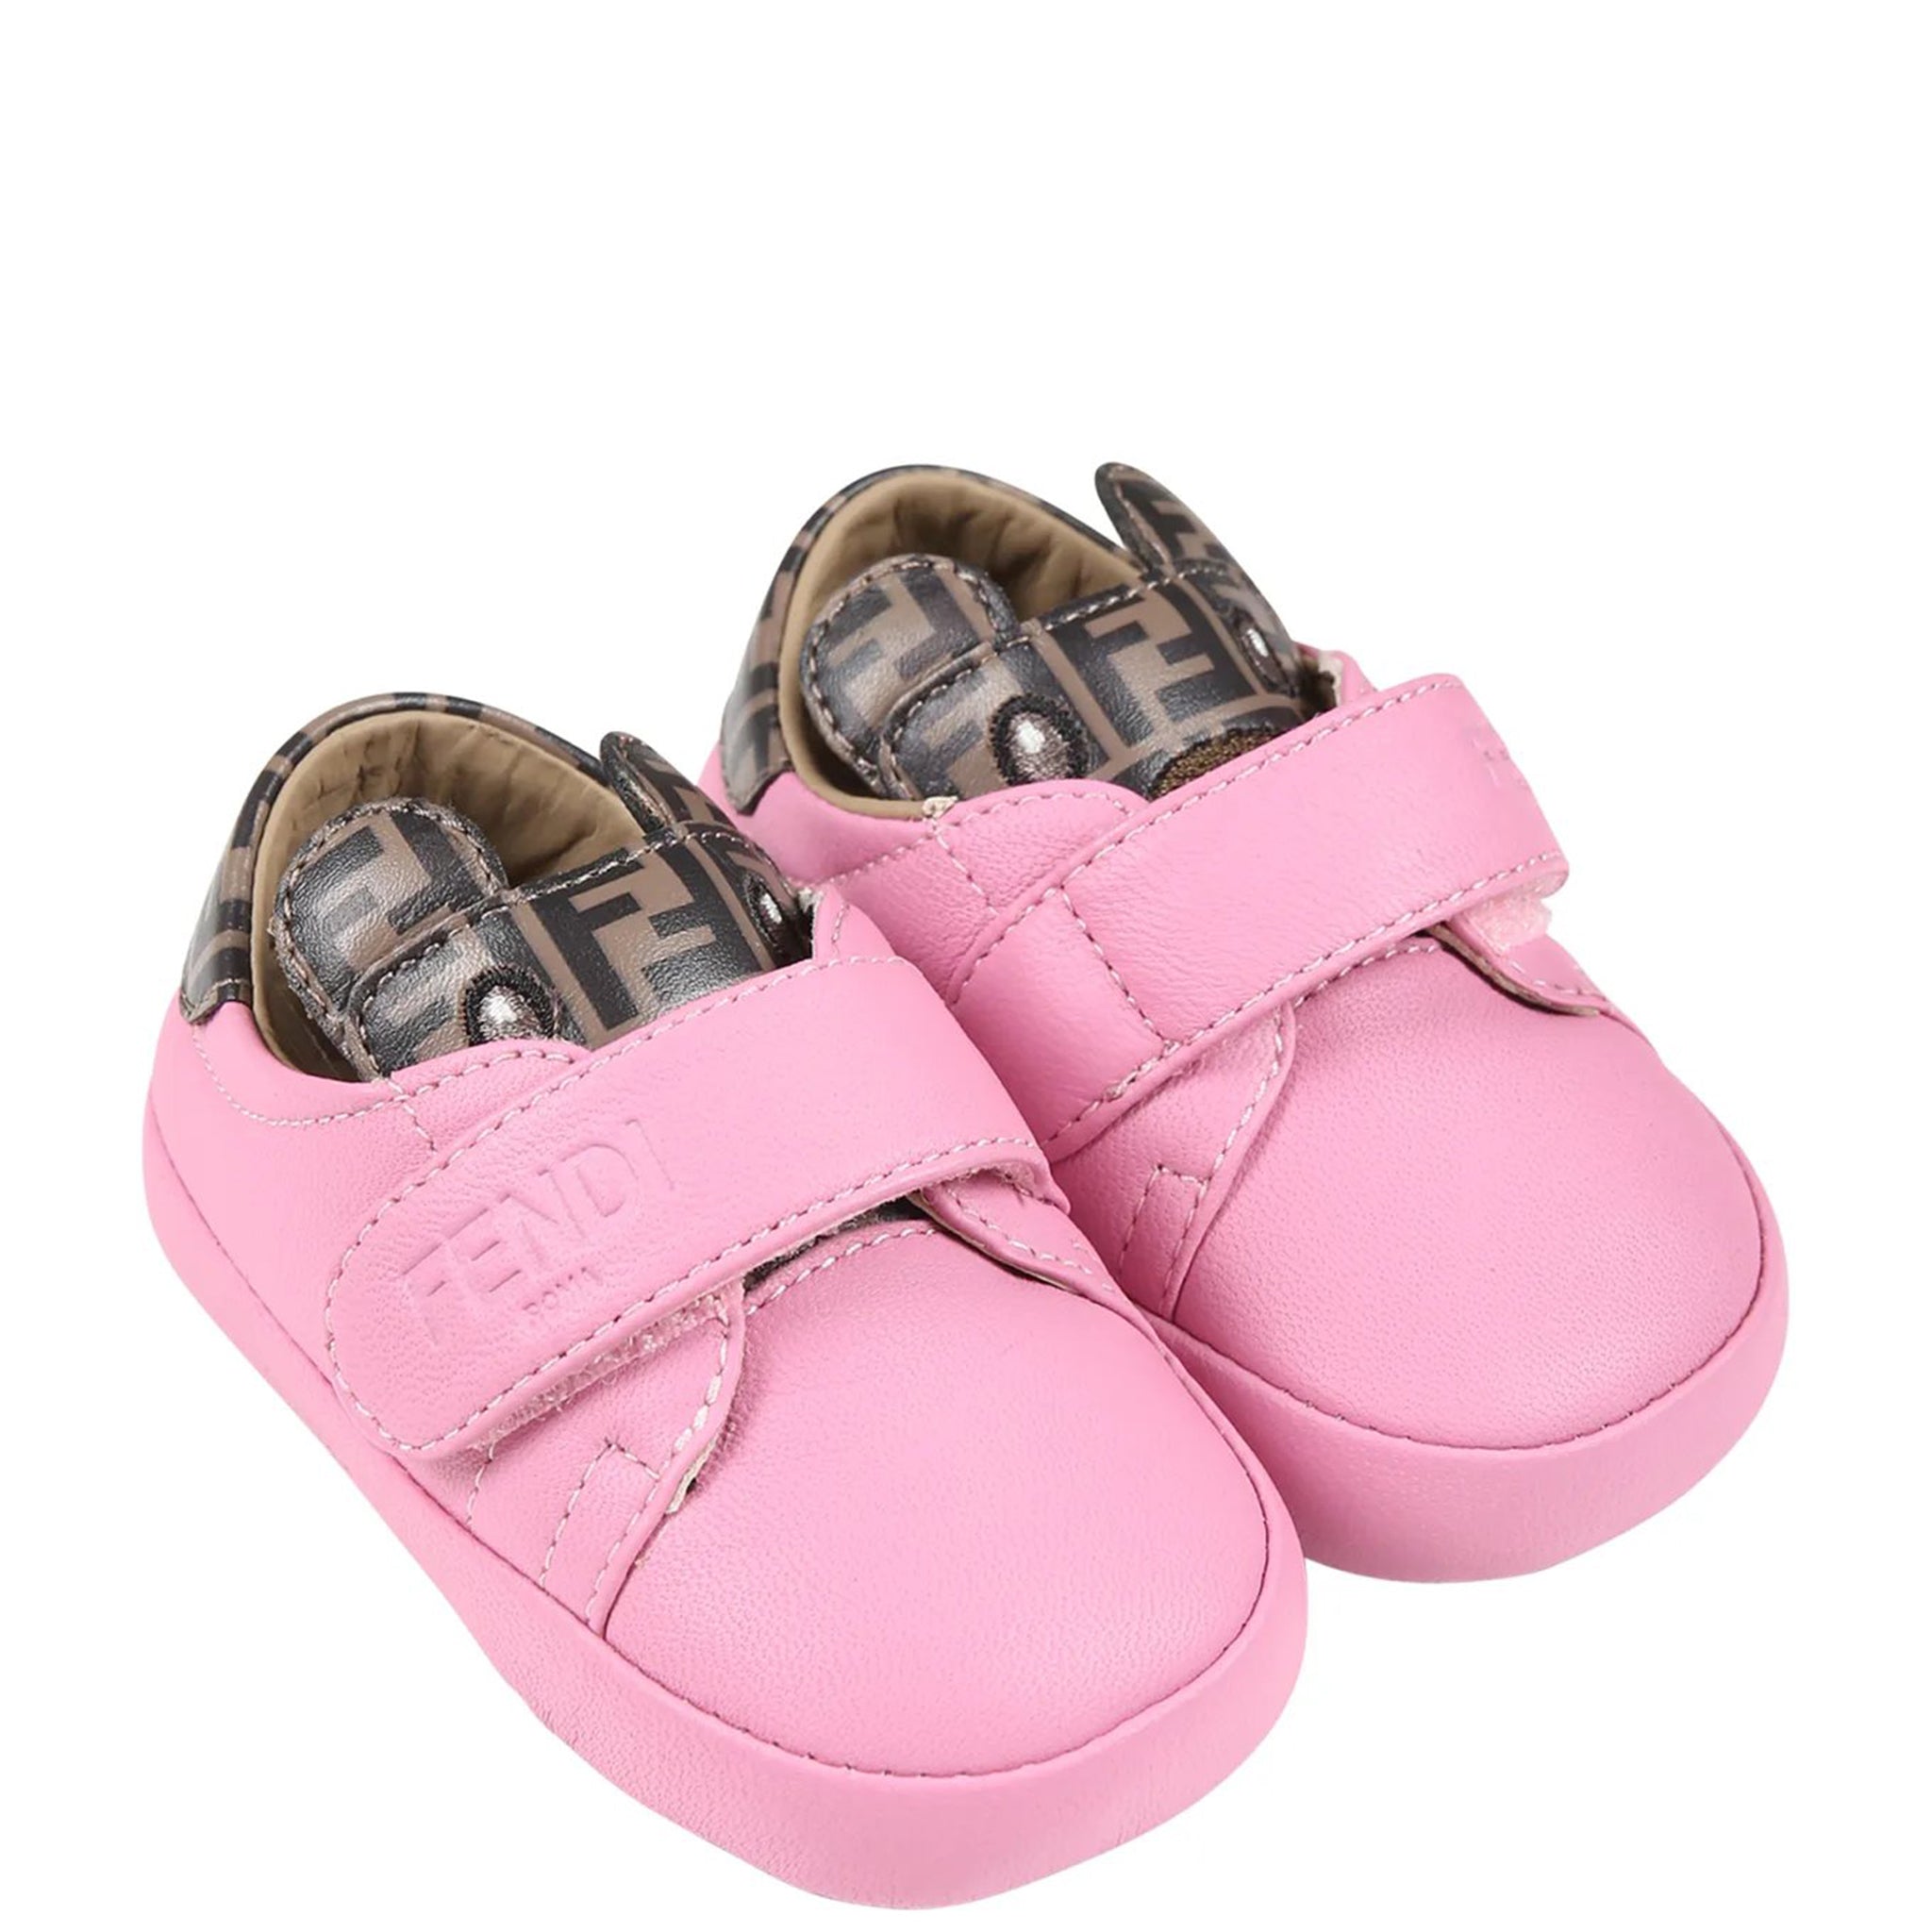 Fendi Baby Girls Teddy & FF Print Sneakers IV Pink